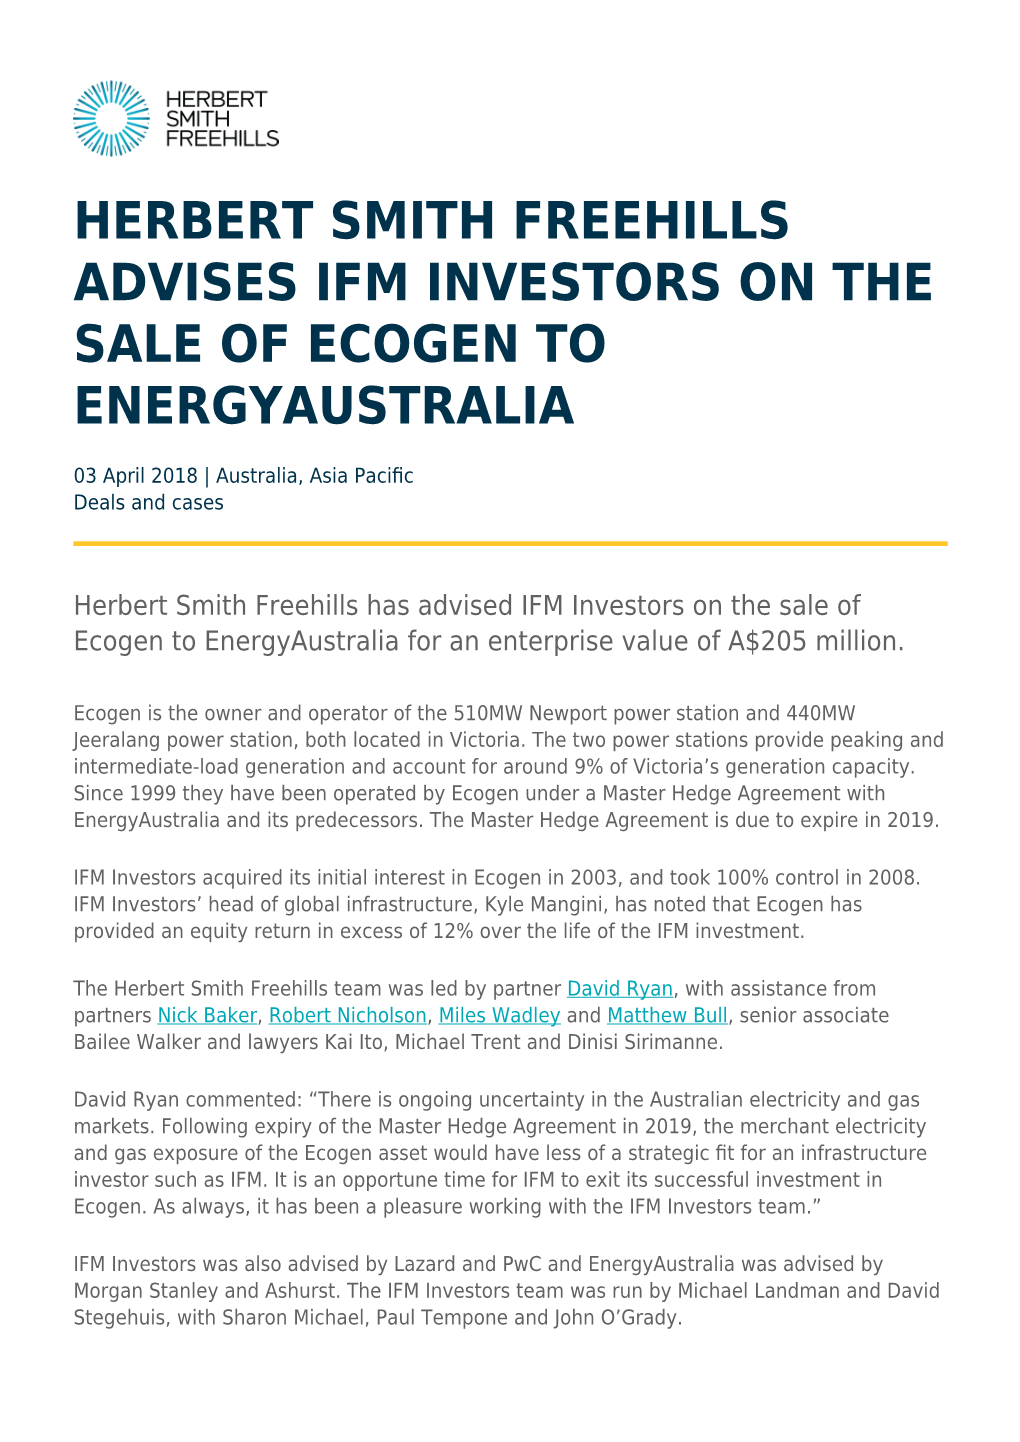 Herbert Smith Freehills Advises Ifm Investors on the Sale of Ecogen to Energyaustralia